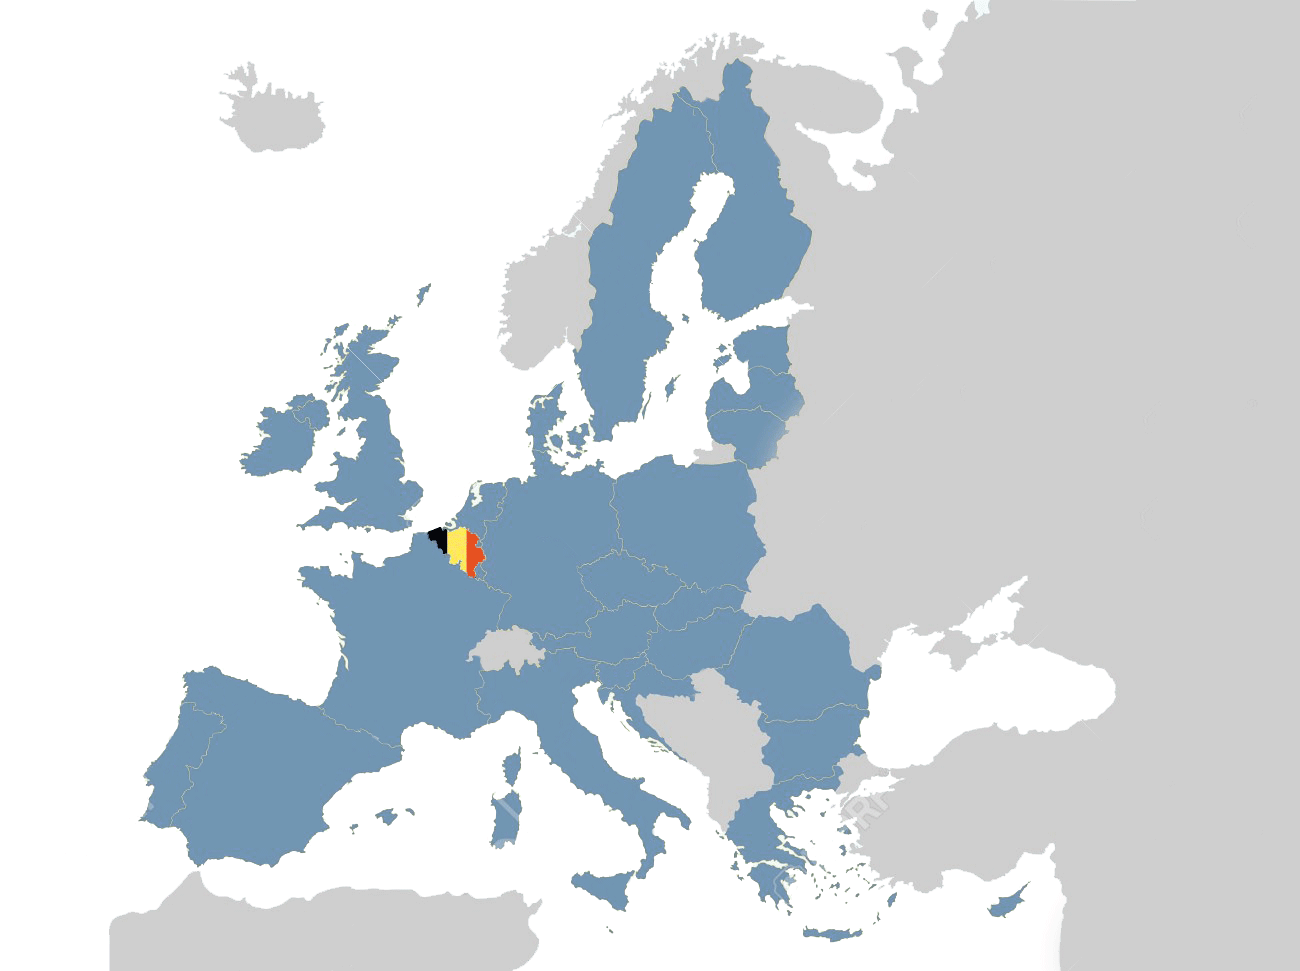 la belgique carte europe - Image